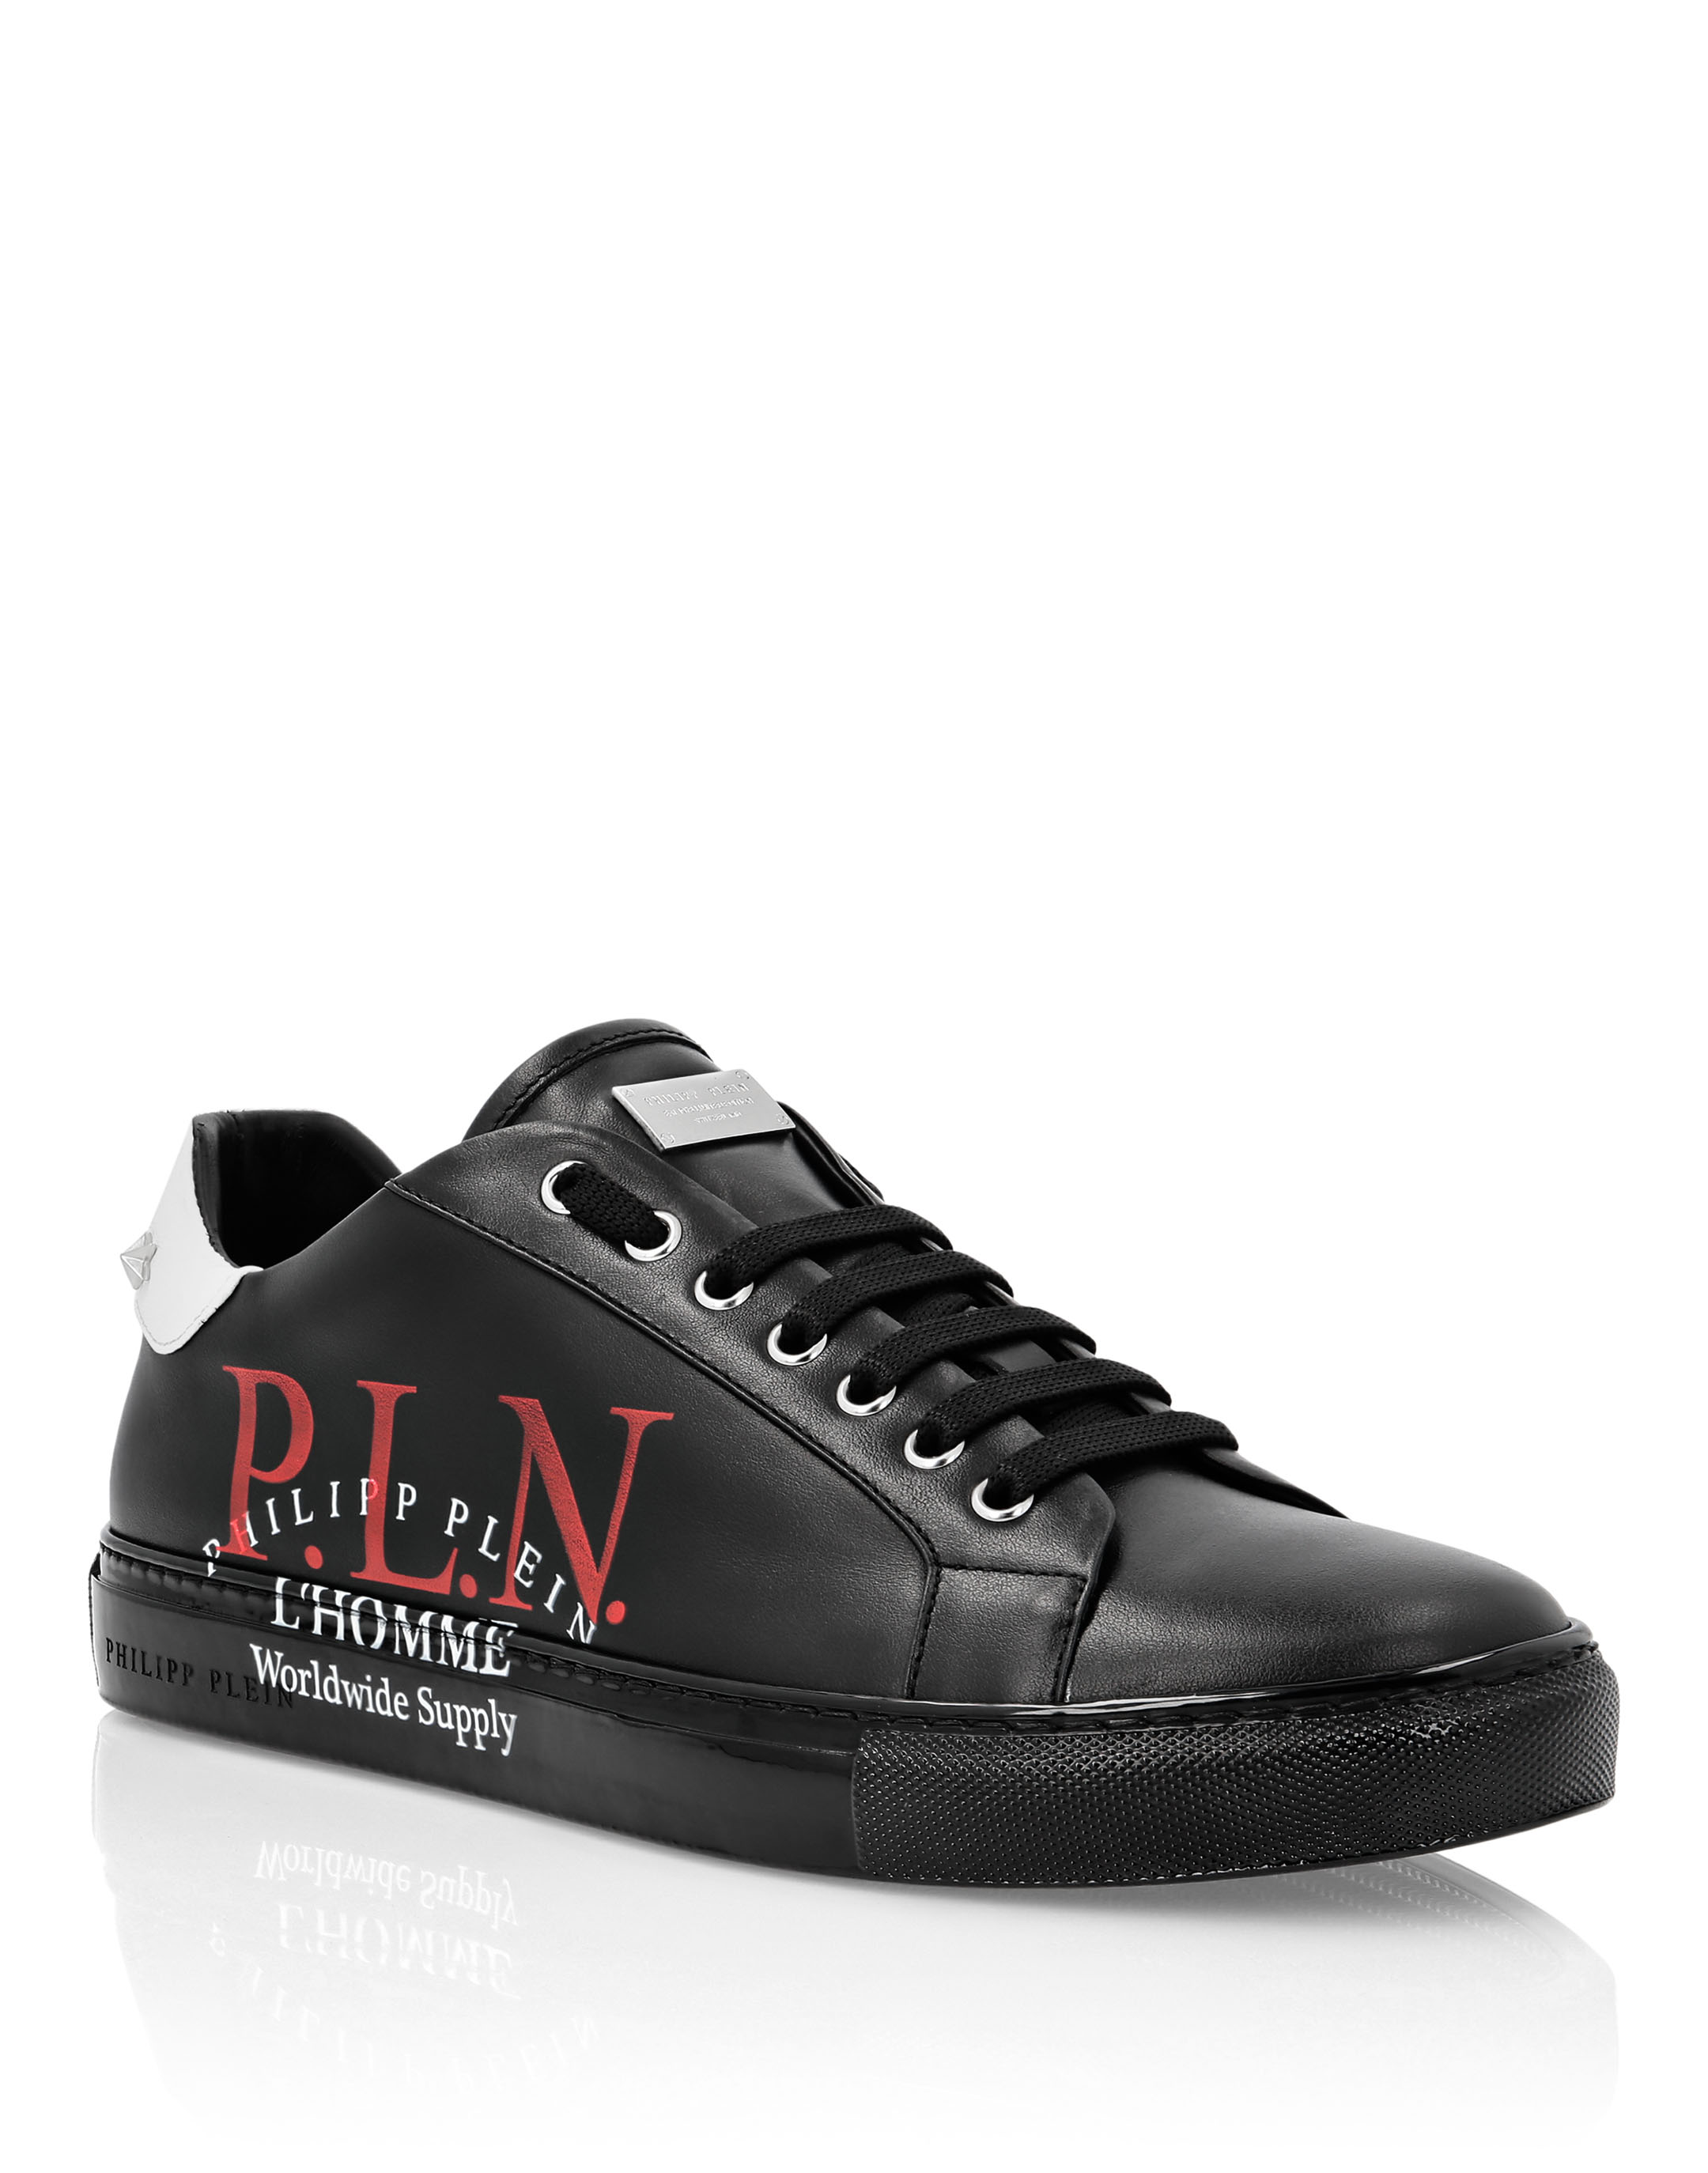 Sneakers P.L.N. | Philipp Plein Outlet